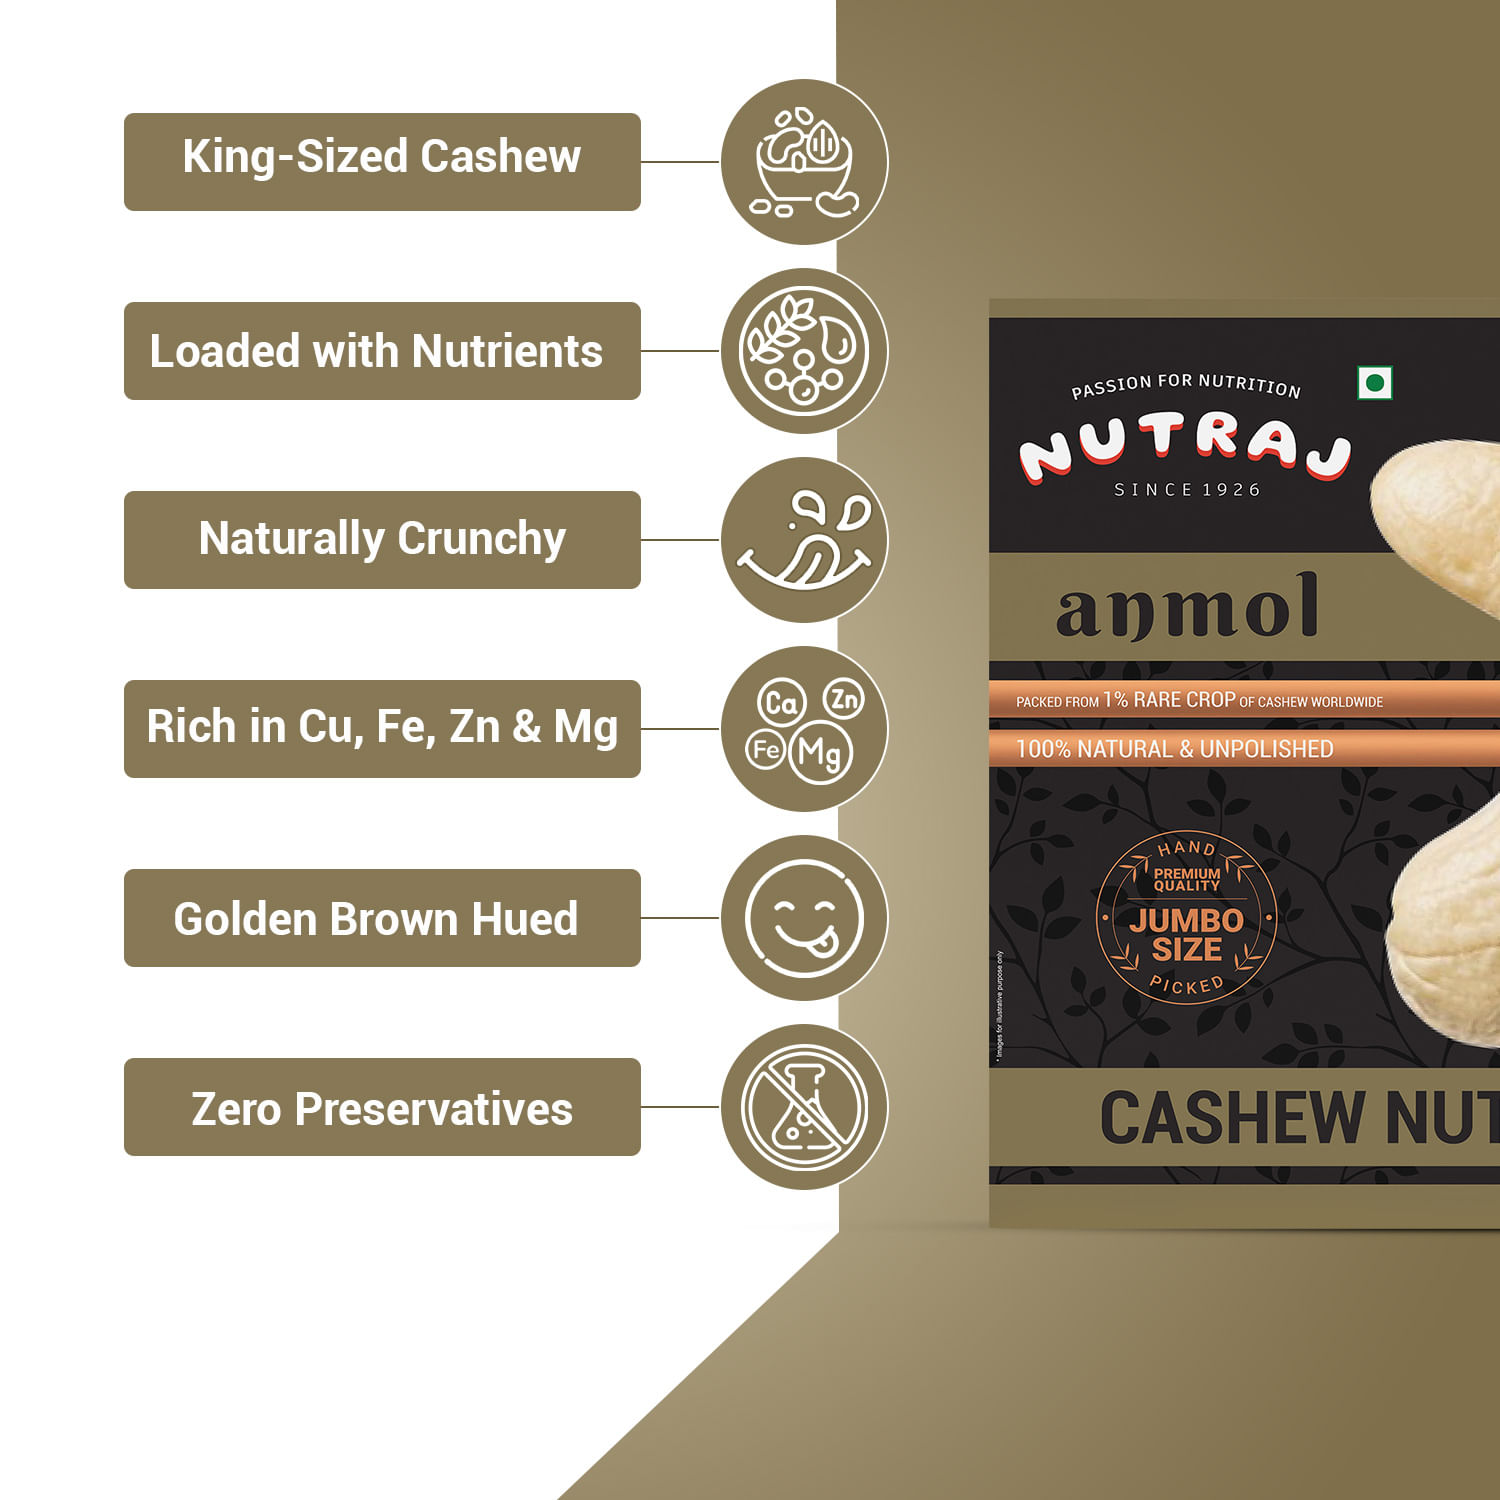 Anmol  Premium Cashew Nuts (Jumbo Size - 100% Natural - Rare Crop)